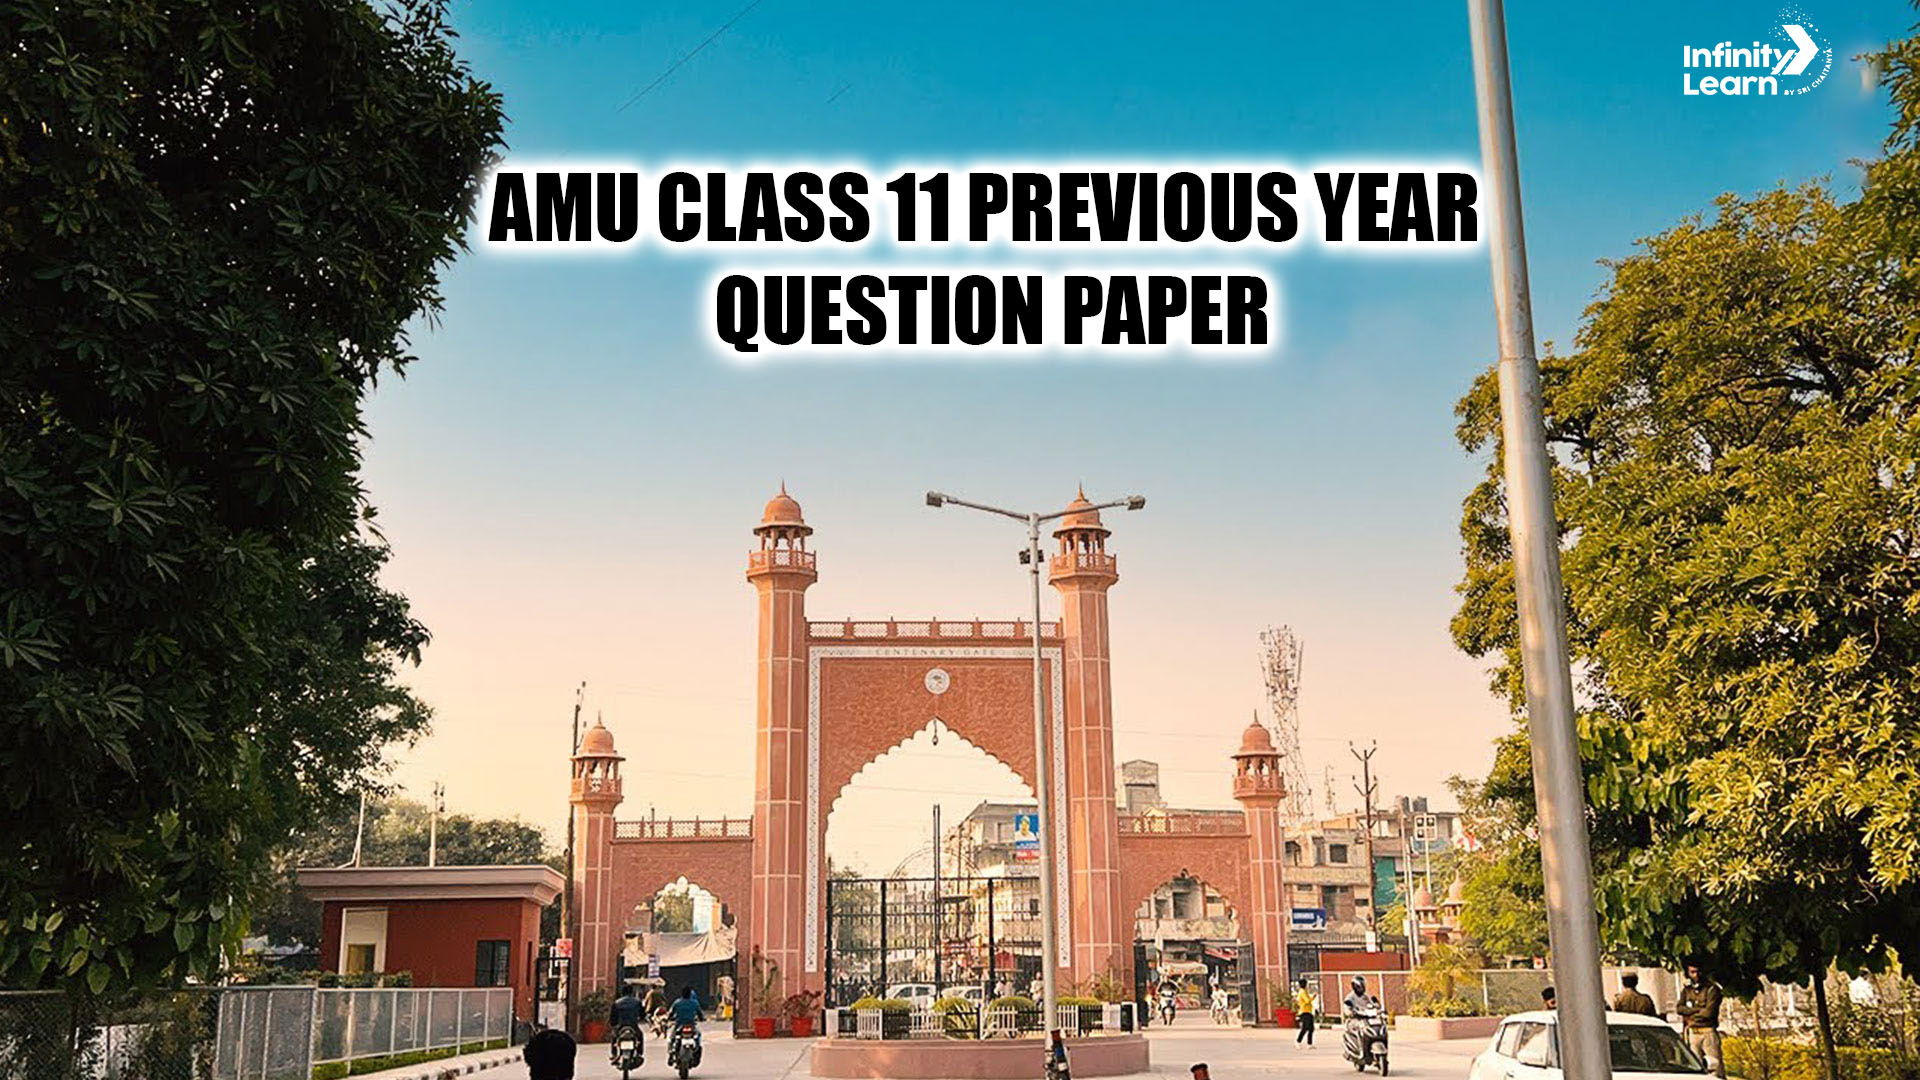 AMU Class 11 Previous Year Question Paper